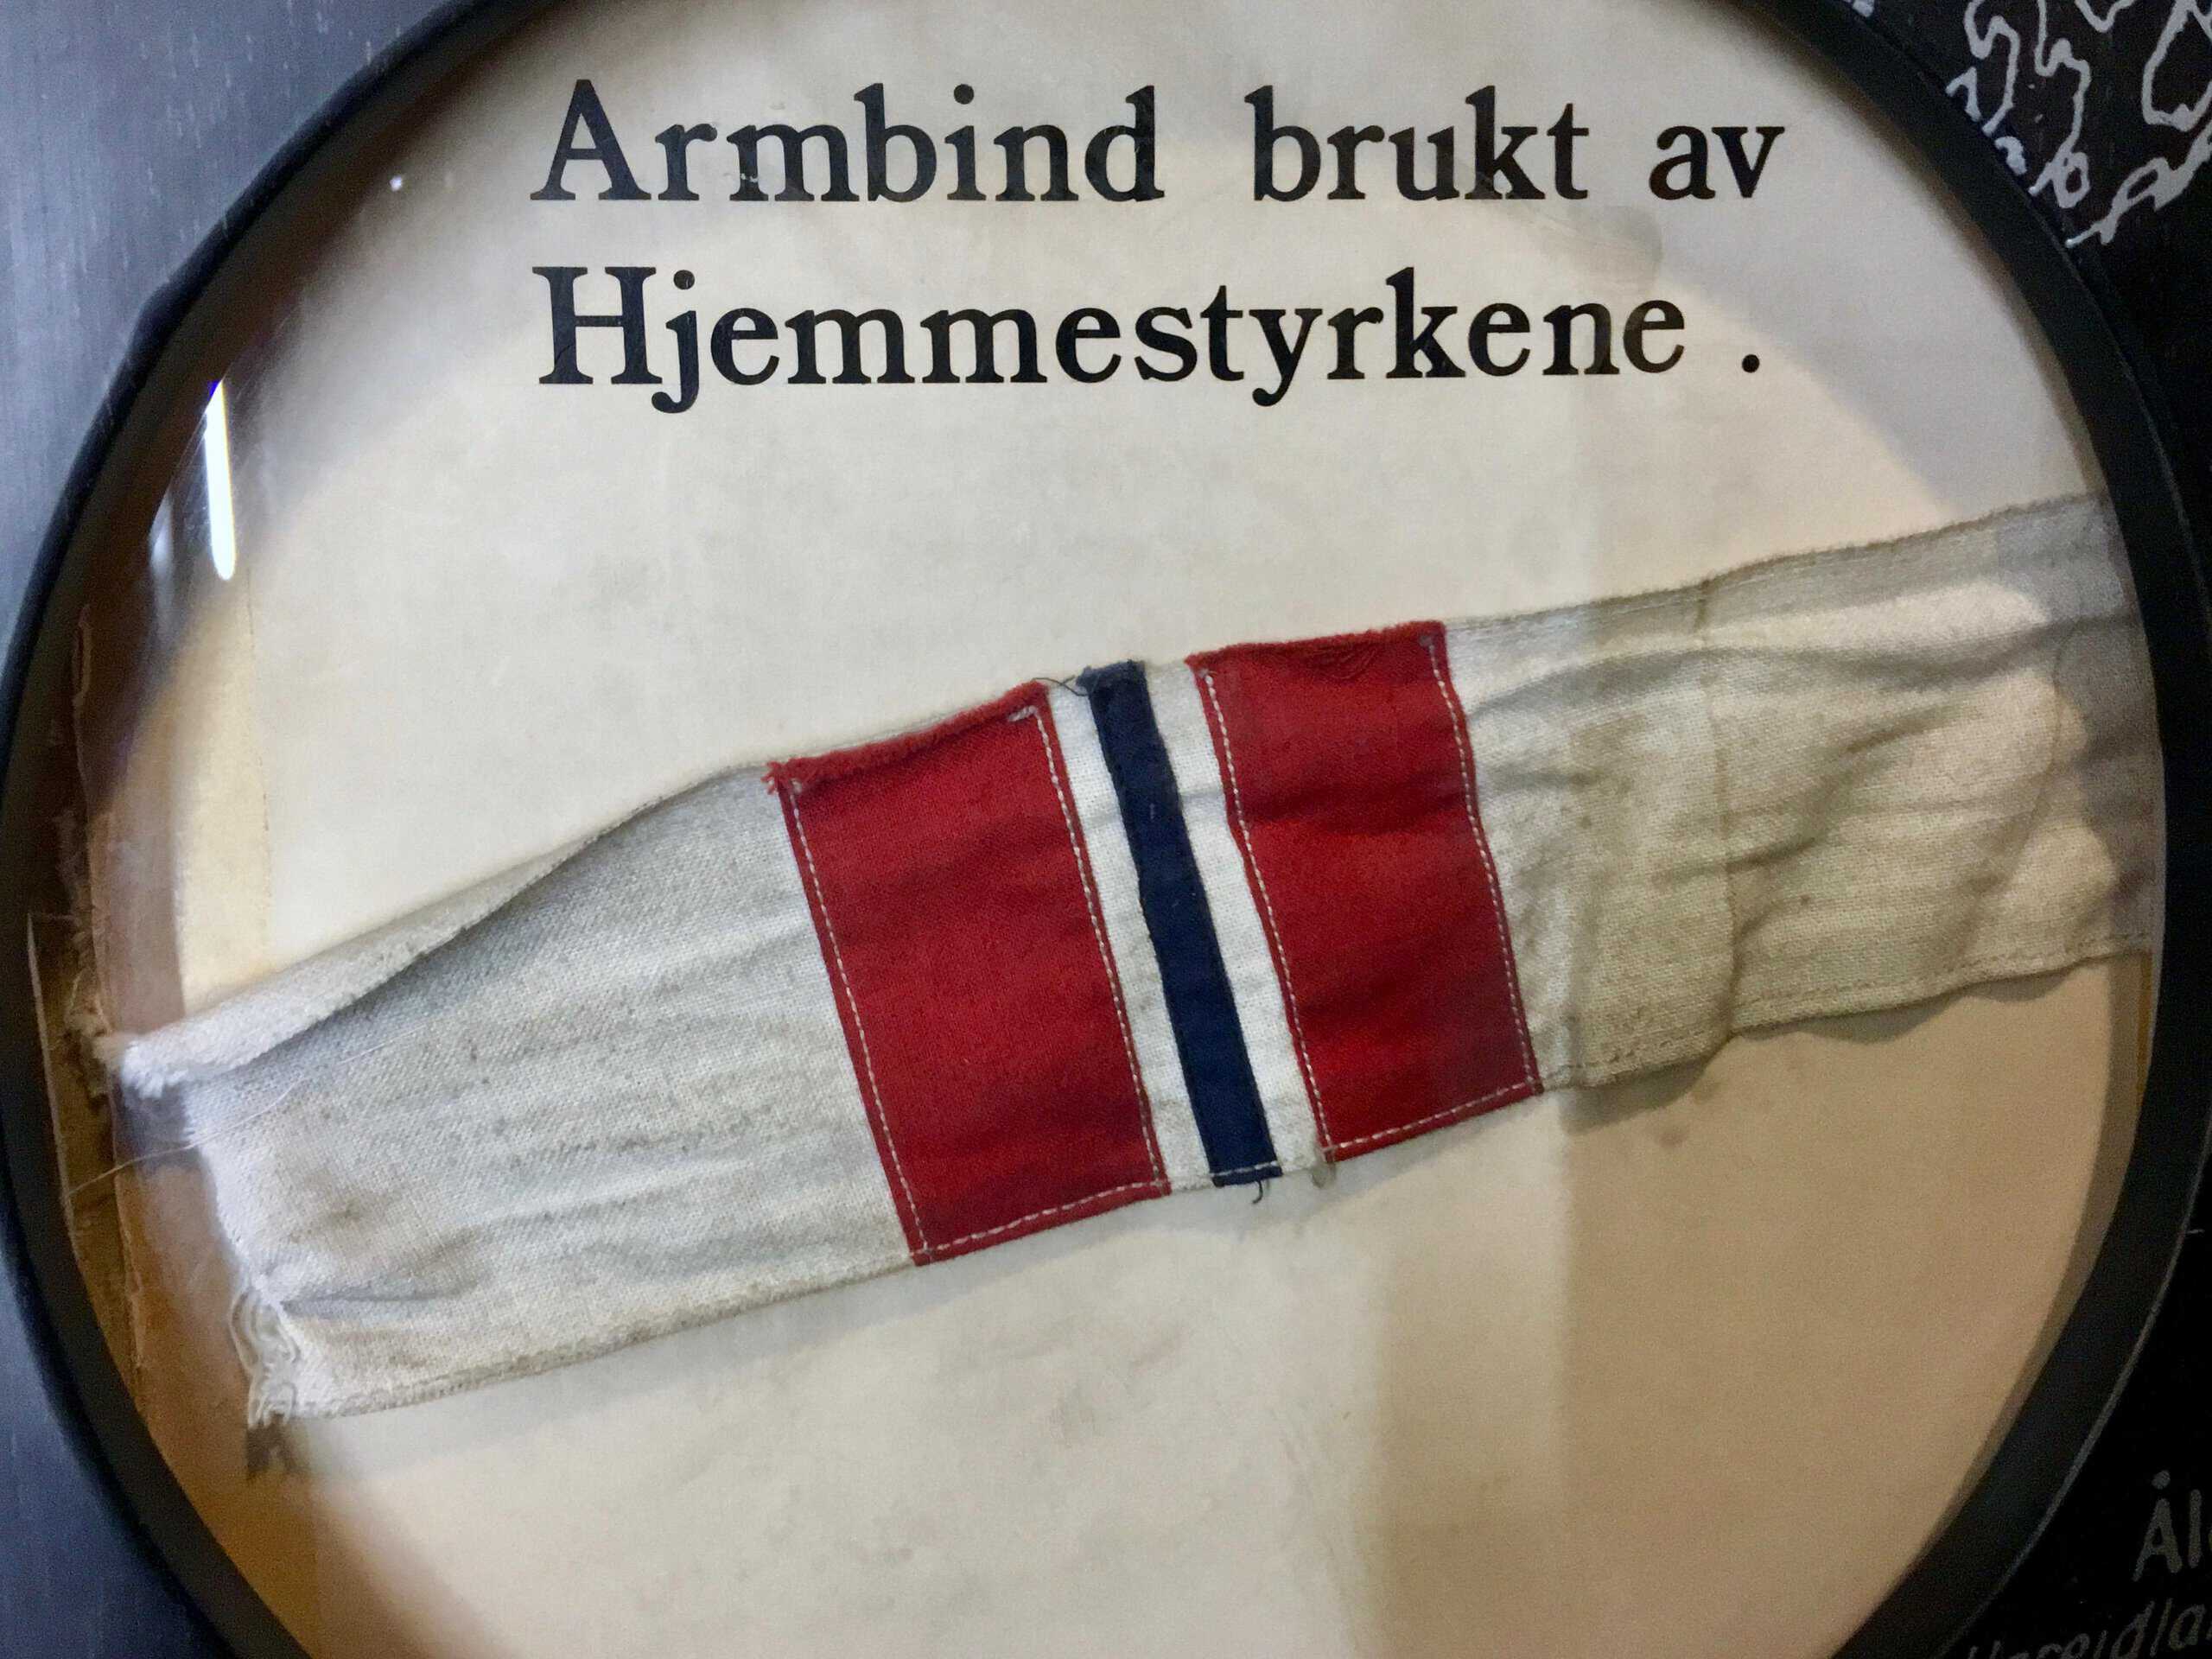 Norwegian World War II Resistance Home Forces armband (armbind brukt av Hjemmestyrkene) displayed at Norway's Resistance Museum in Oslo, photo 2017-11-30 by Wolfmann